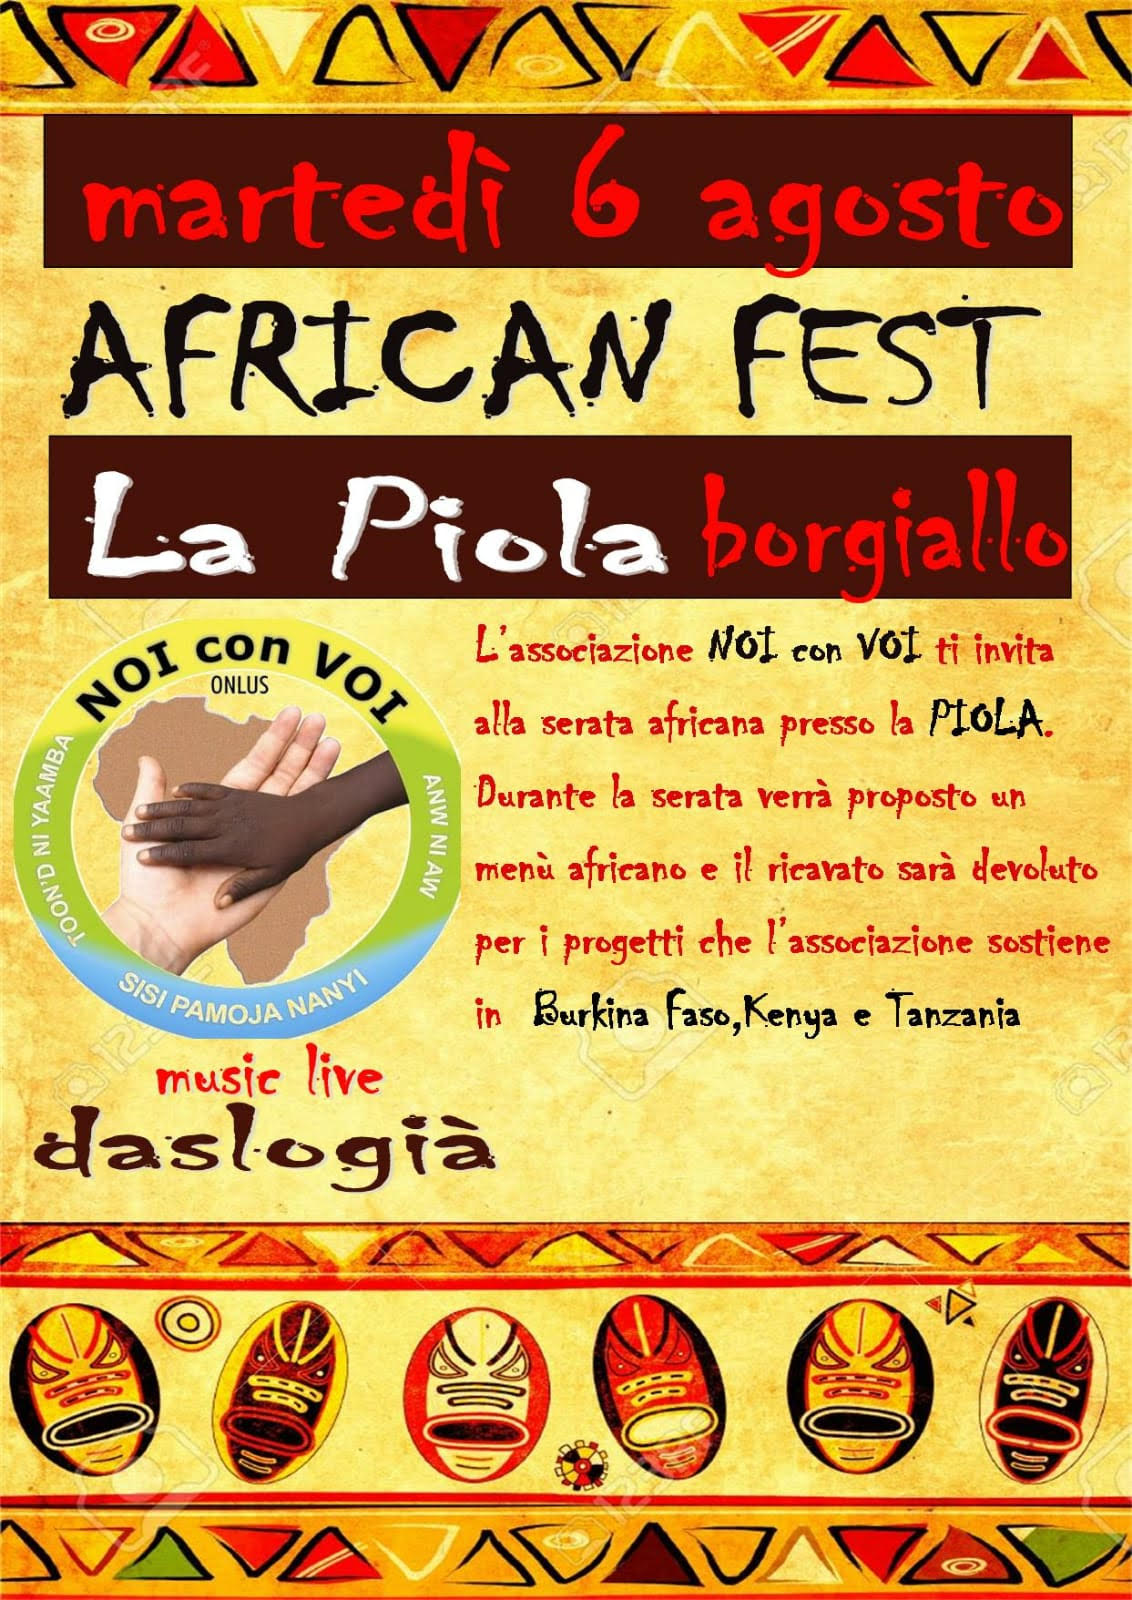 6 agosto 2019: Cena African Fest